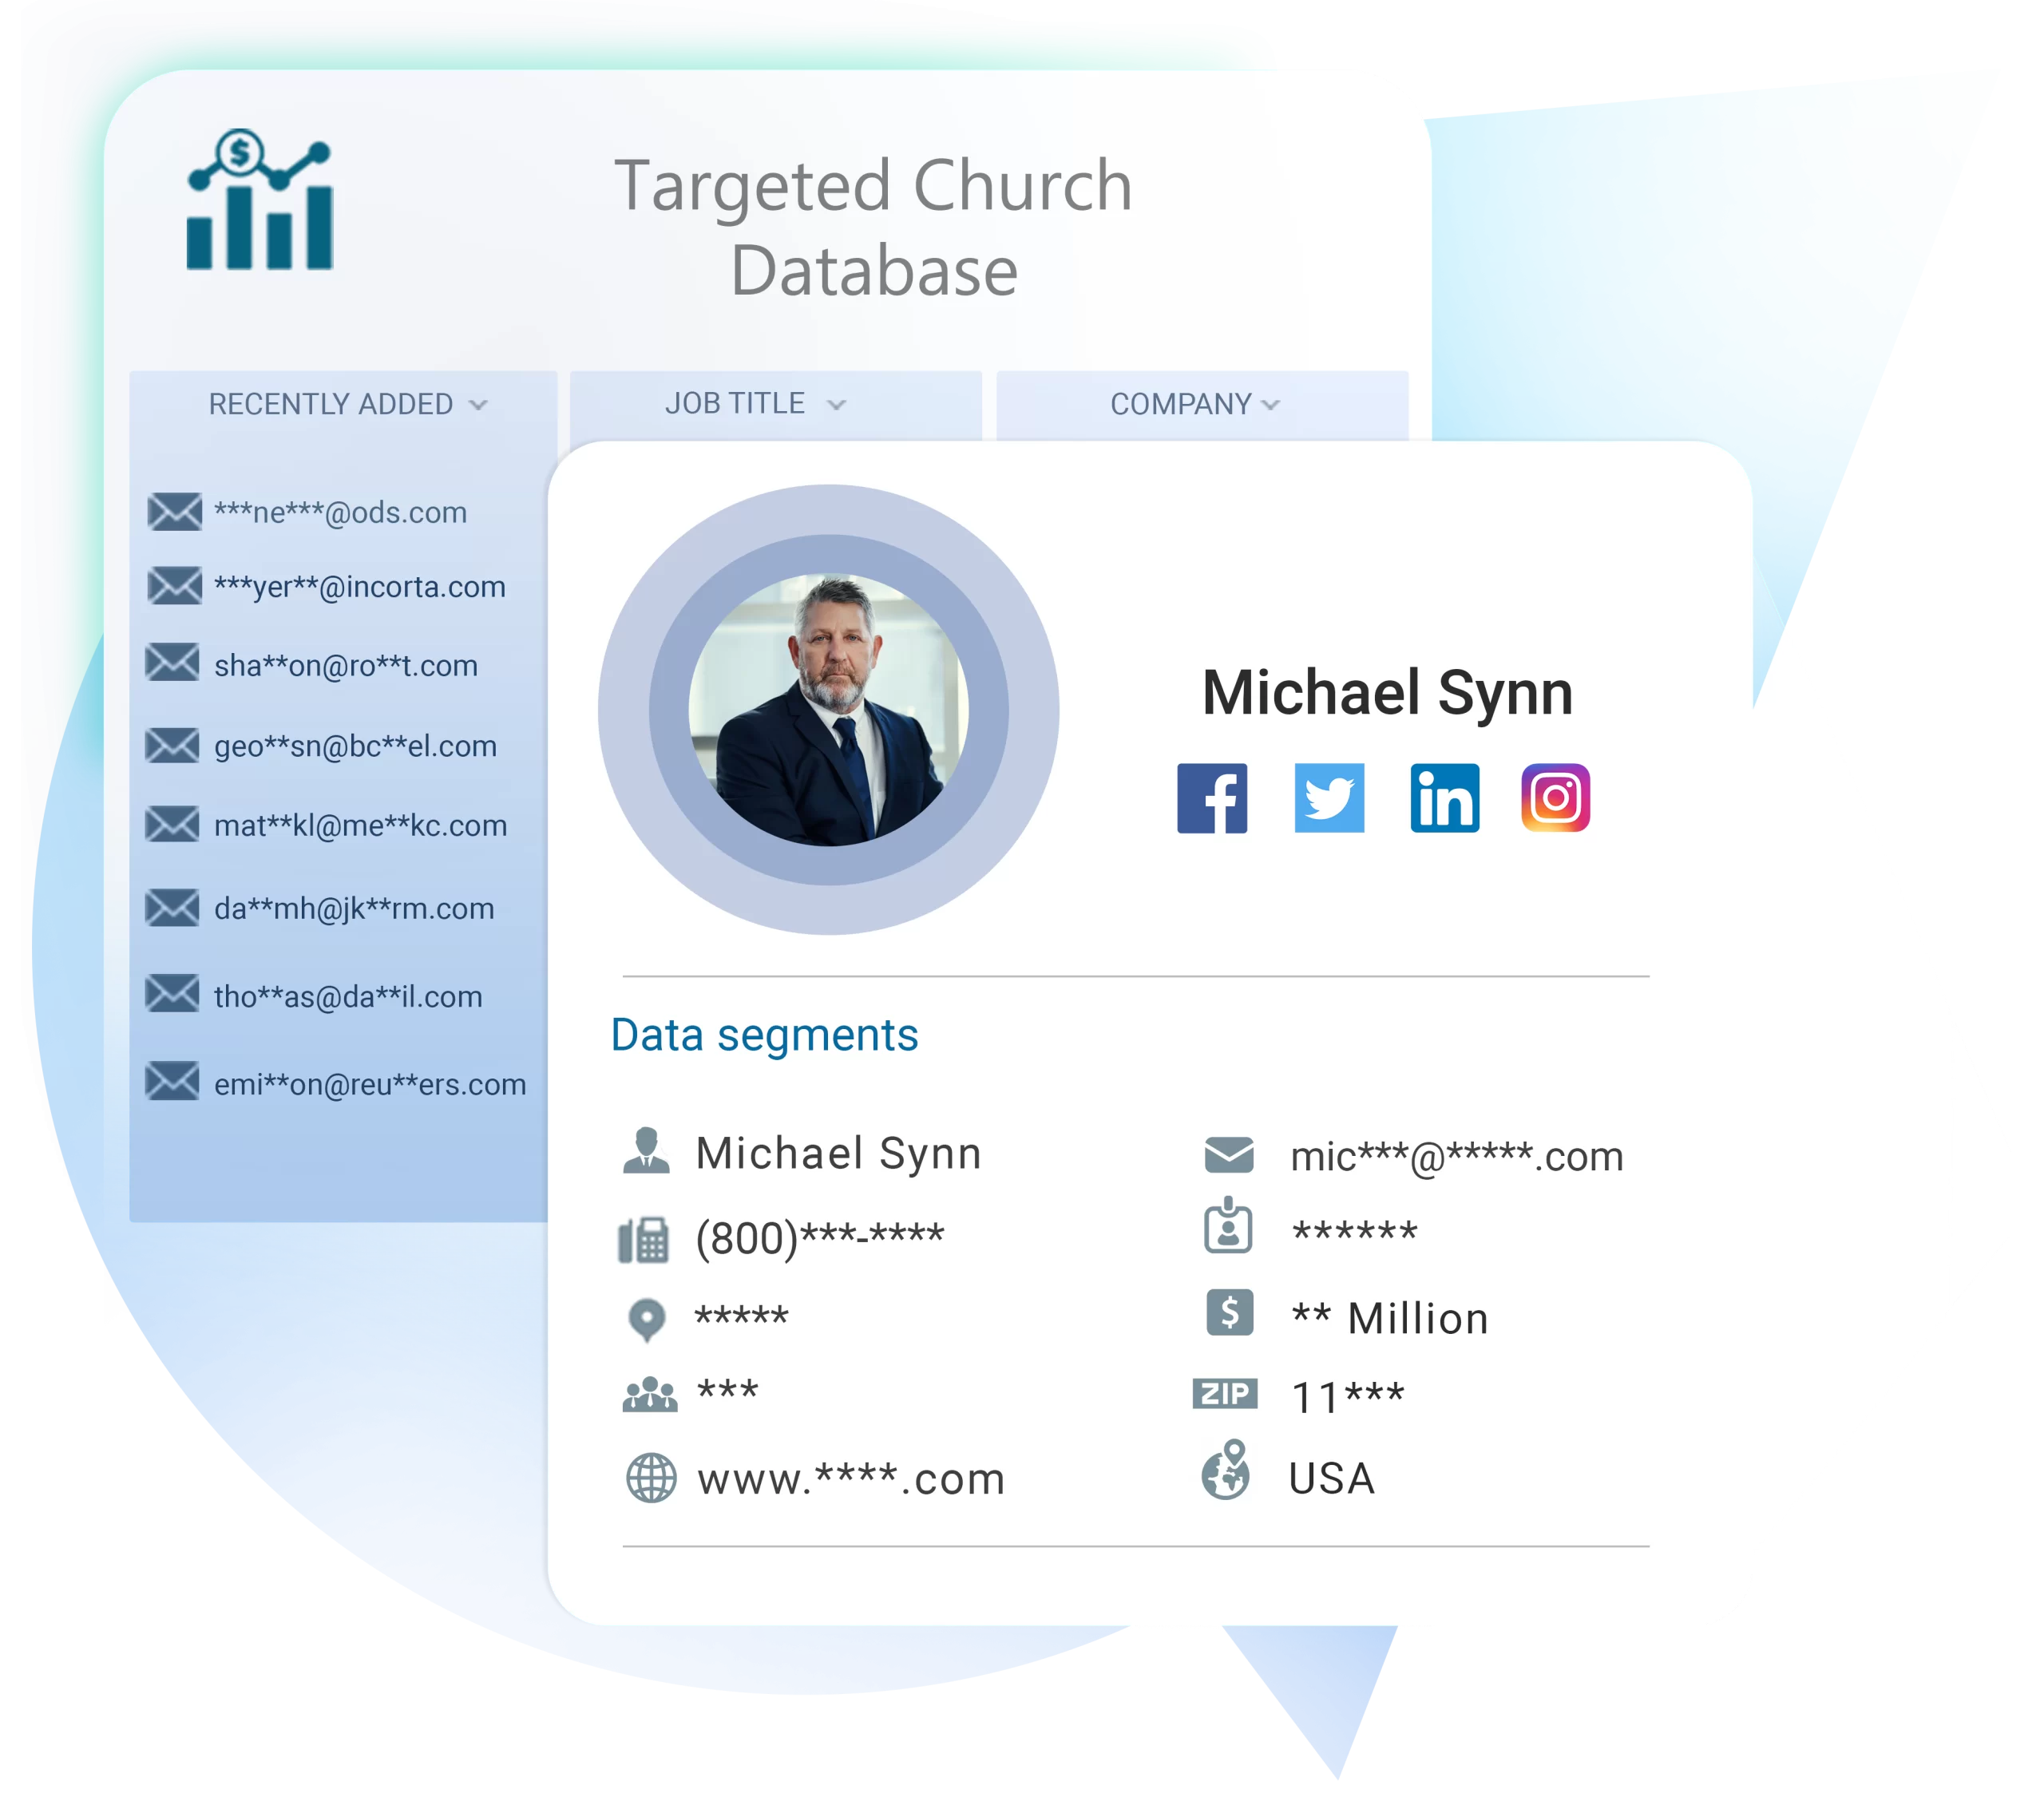 Church Database